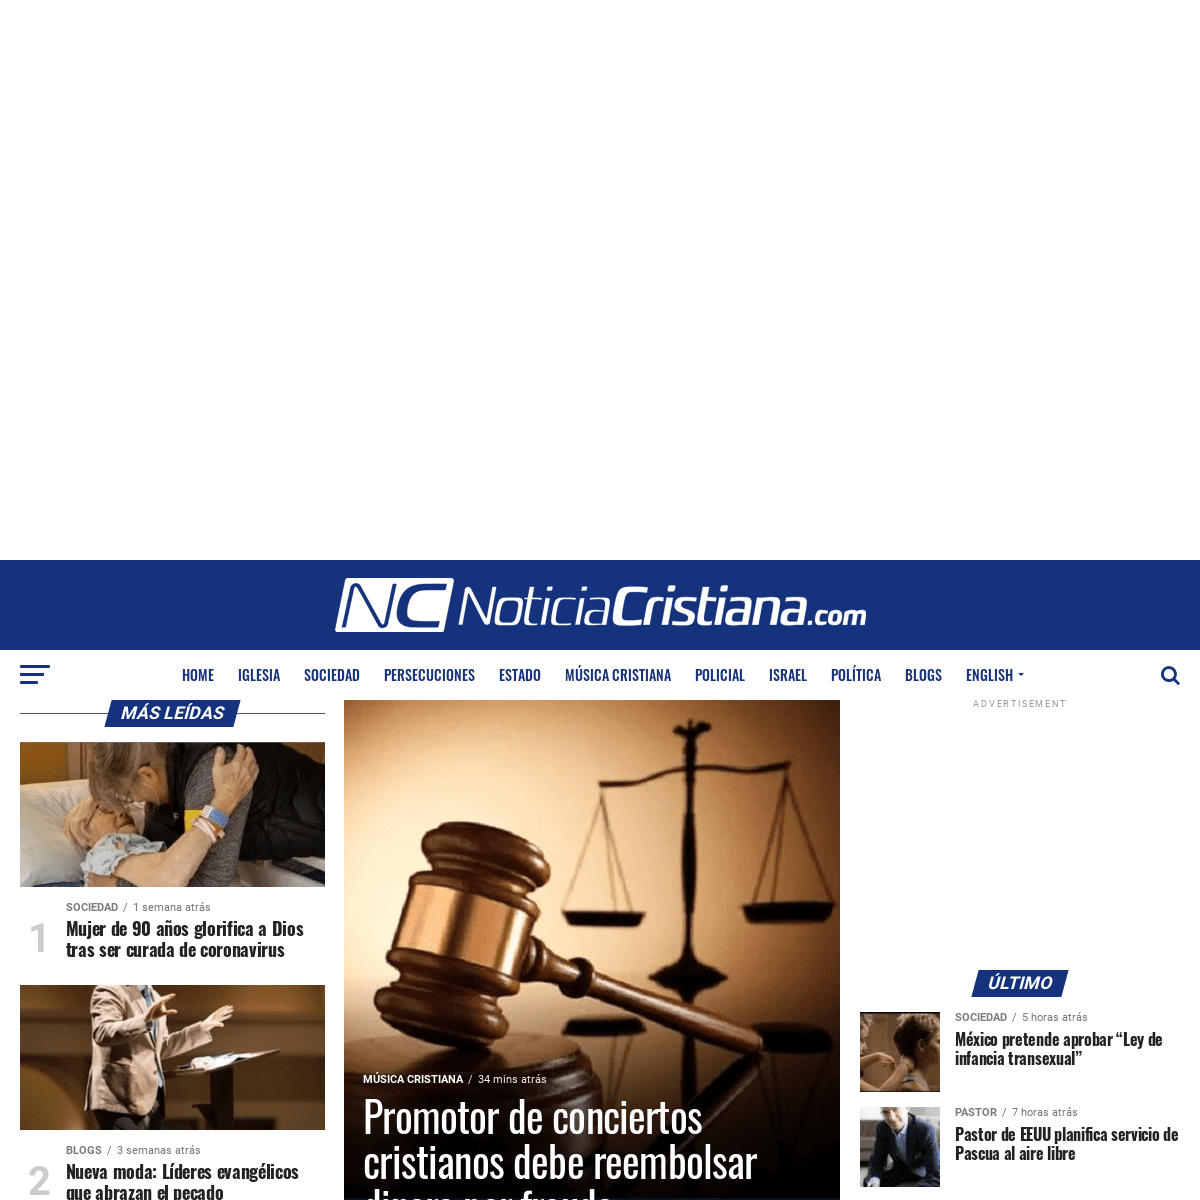 A complete backup of noticiacristiana.com